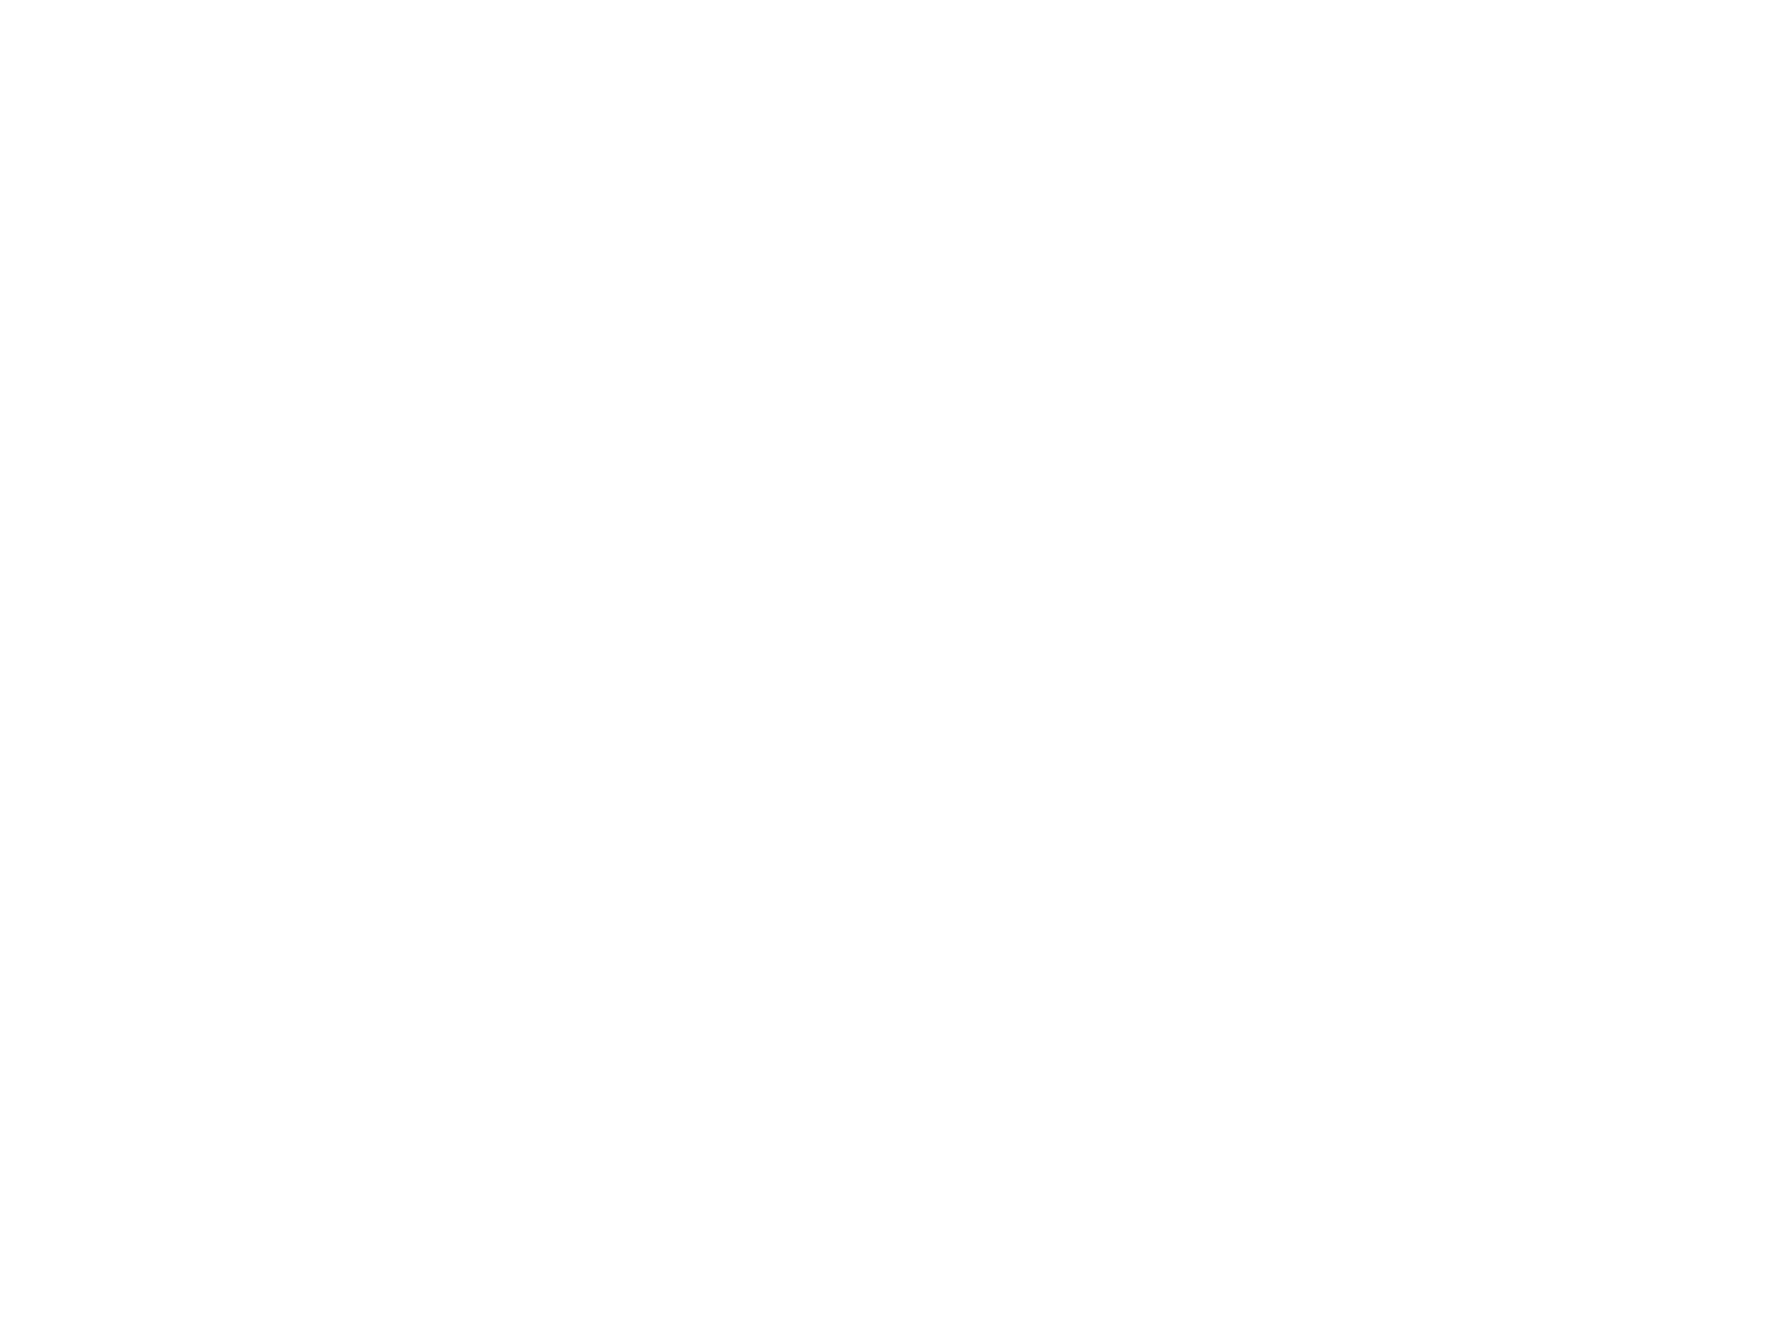 village of birchwood logo - smaller